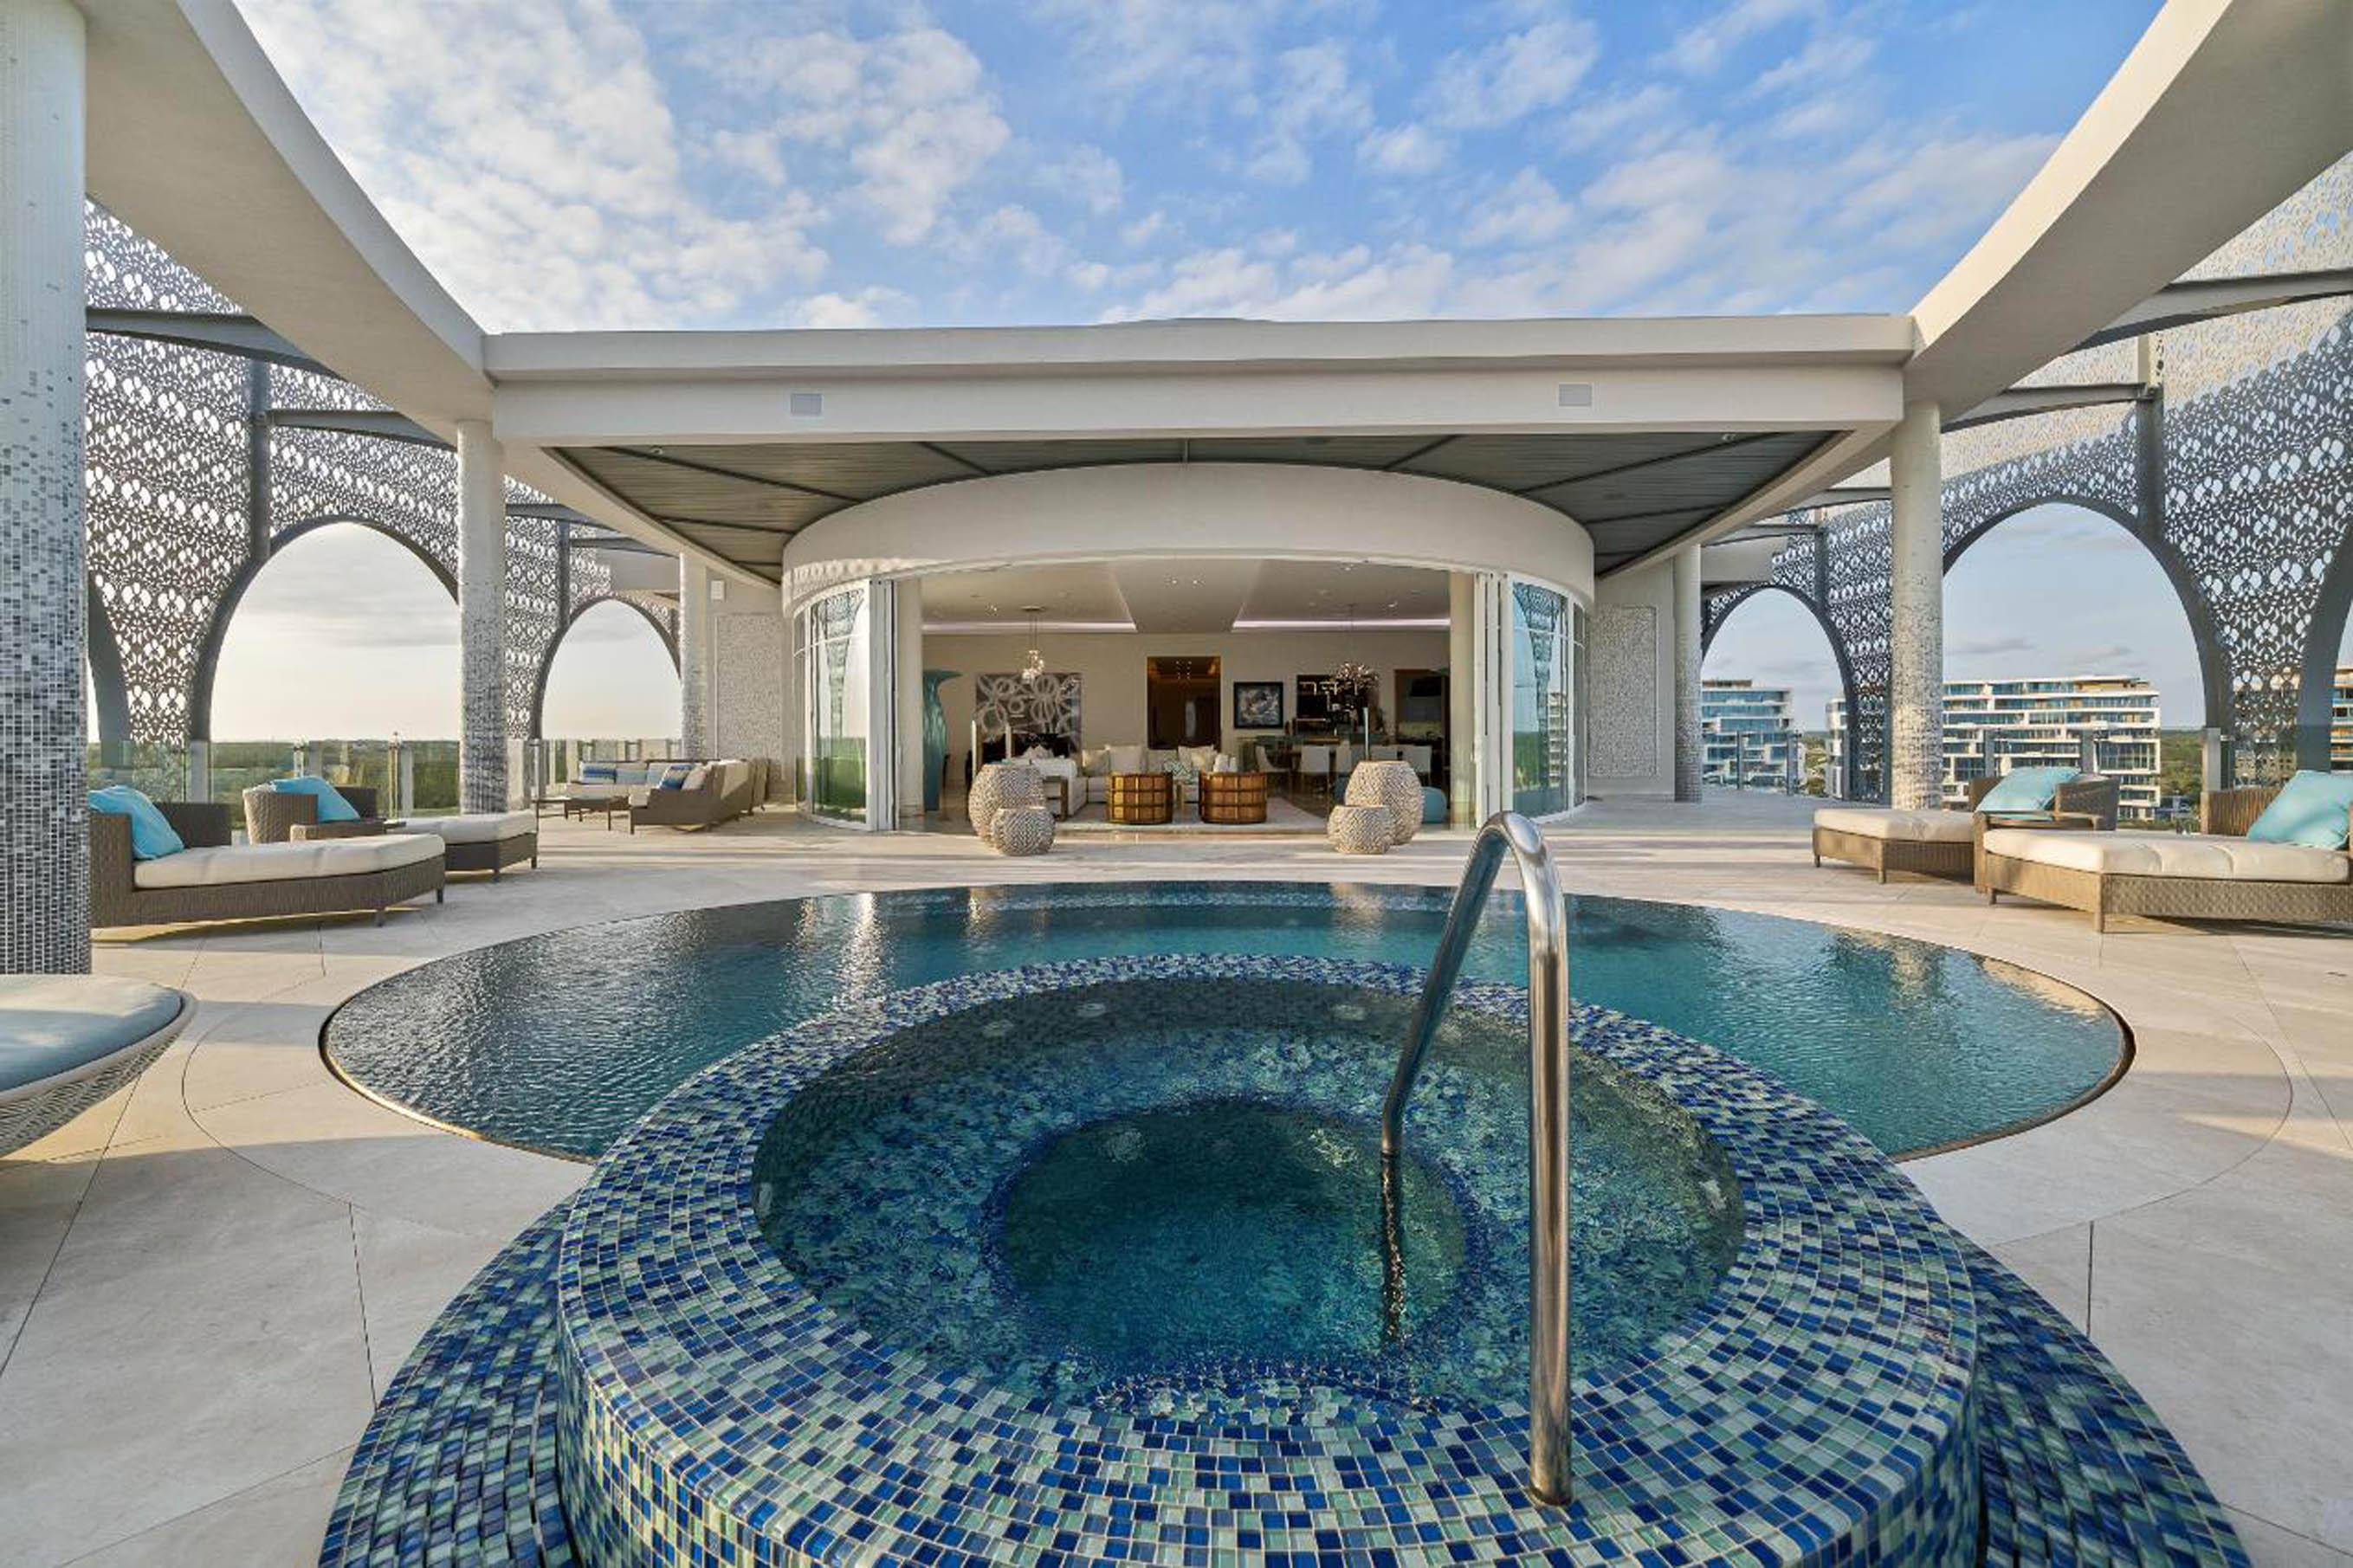 penthouse deținut de Sam Bankman-Fried în Bahamas